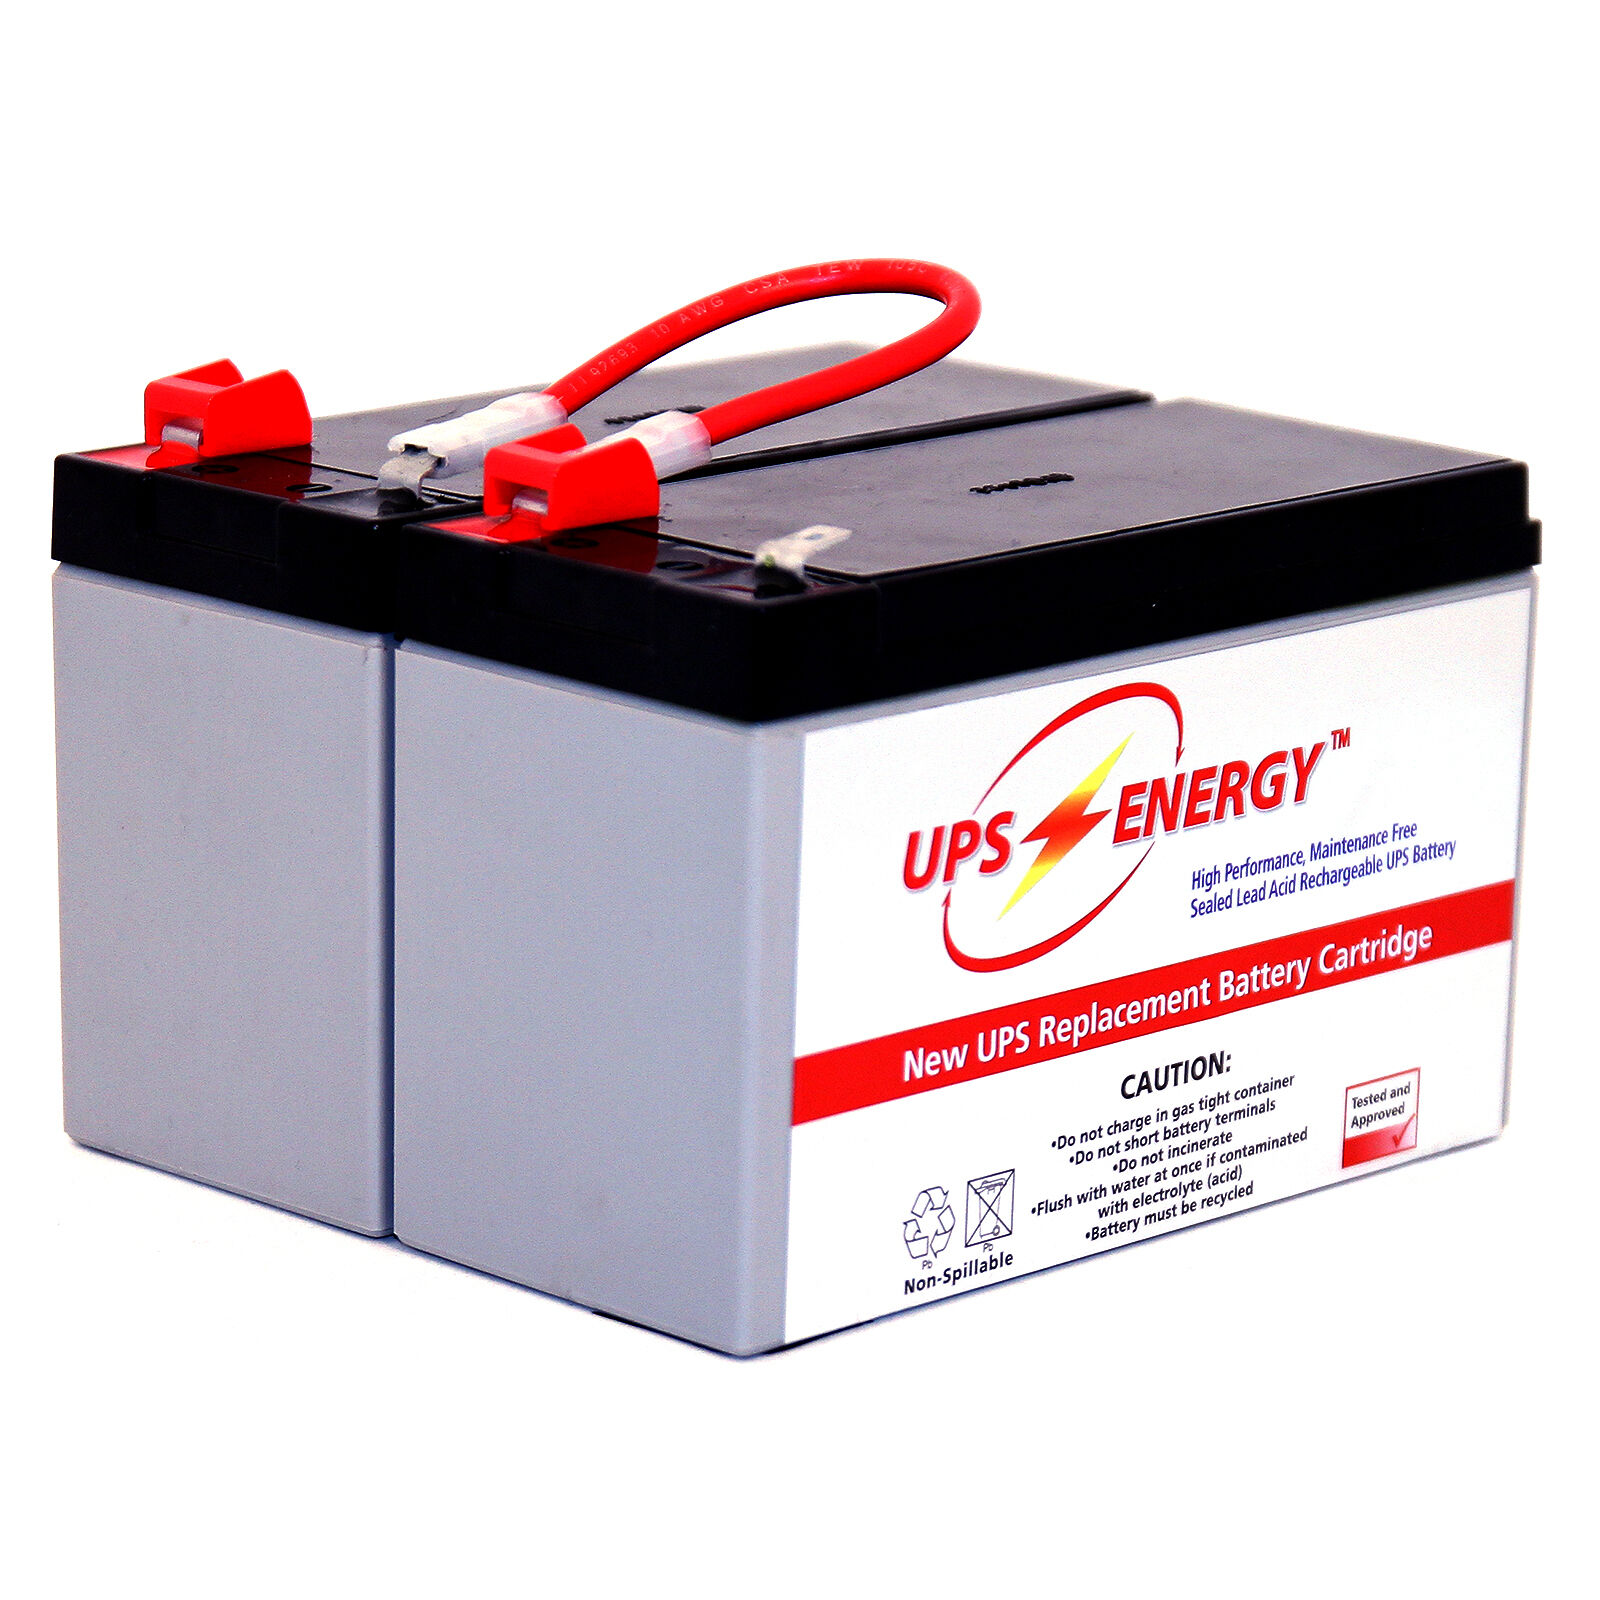 APC Smart-UPS 600 (AP600) - UPS Energy - Brand New High Quality Battery